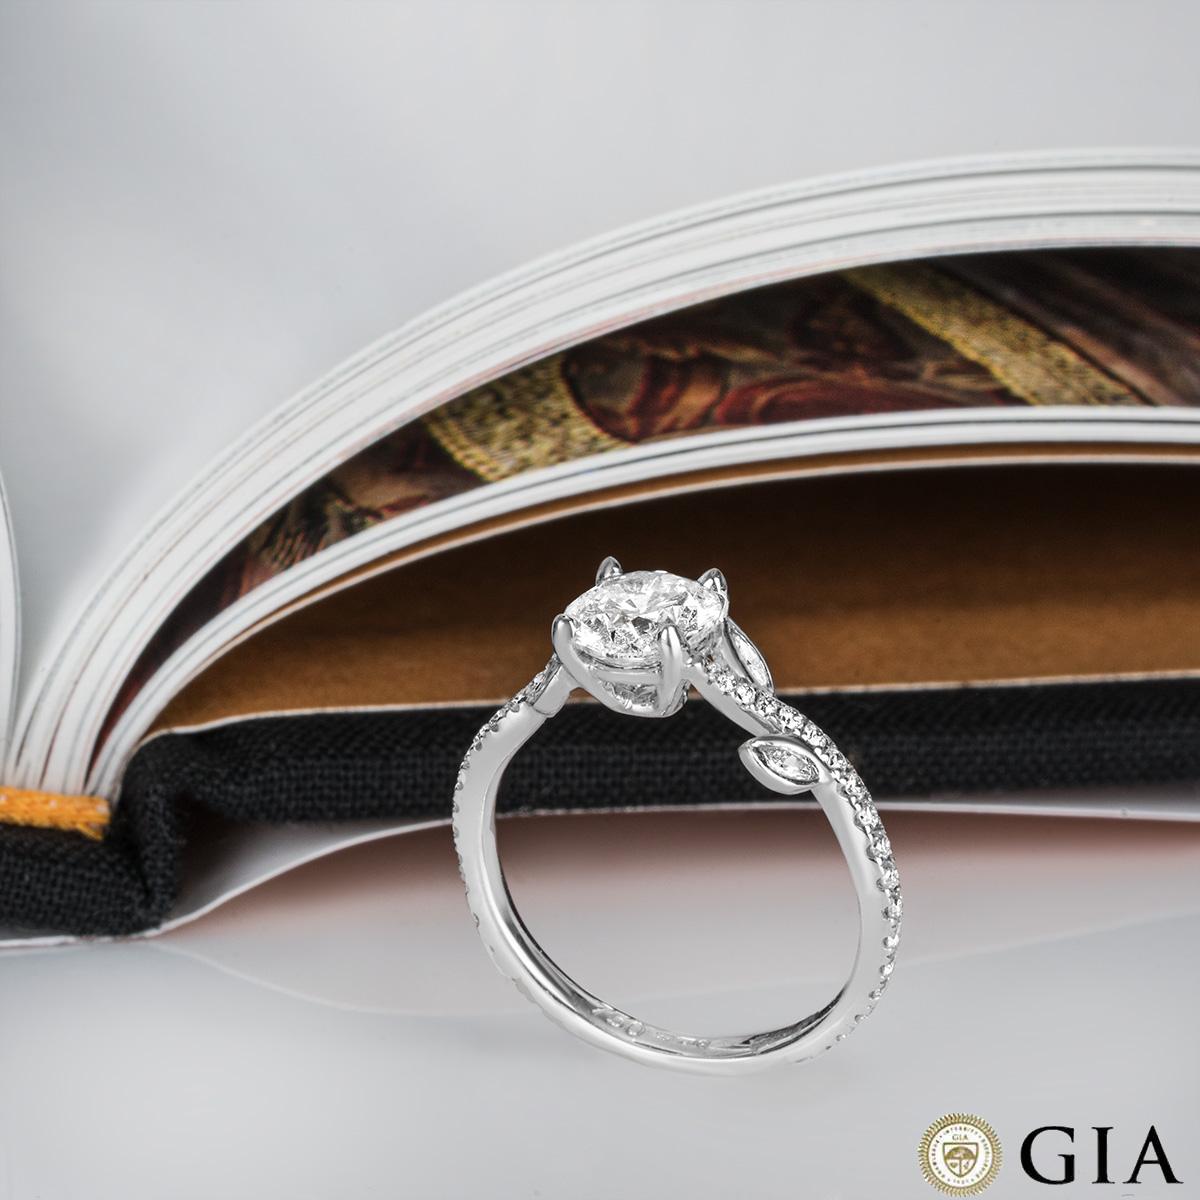 GIA Certified White Gold Round Brilliant Cut Diamond Ring 1.01ct E/VVS1 For Sale 3